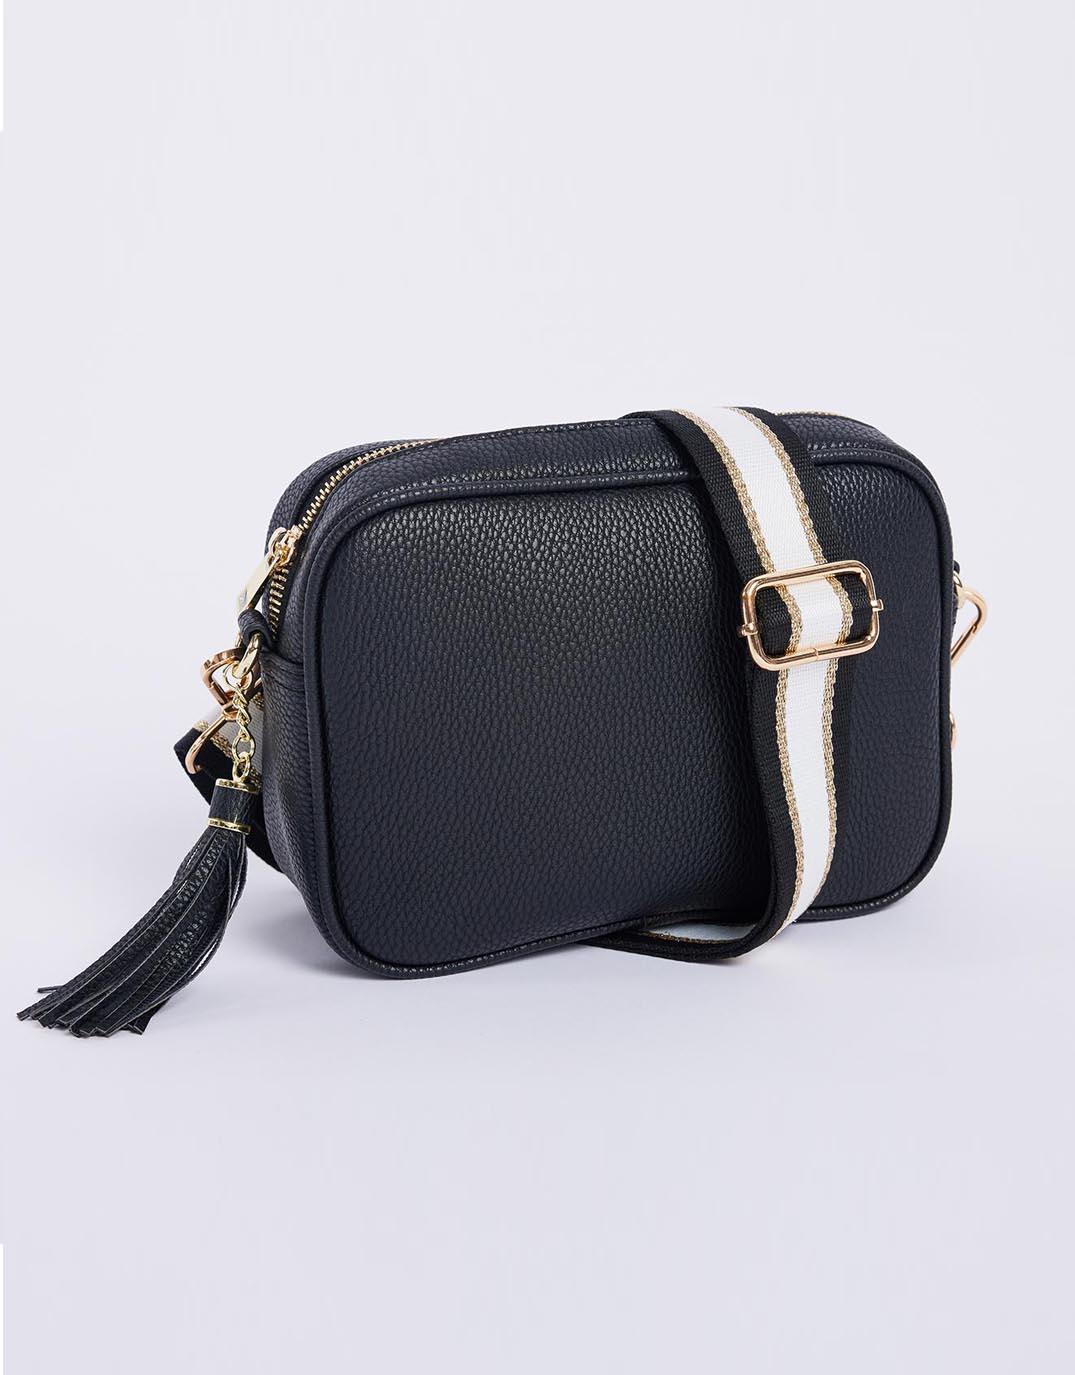 paulaglazebrook. - Zoe Crossbody Bag - Black/Black White Lurex Stripe - paulaglazebrook Accessories